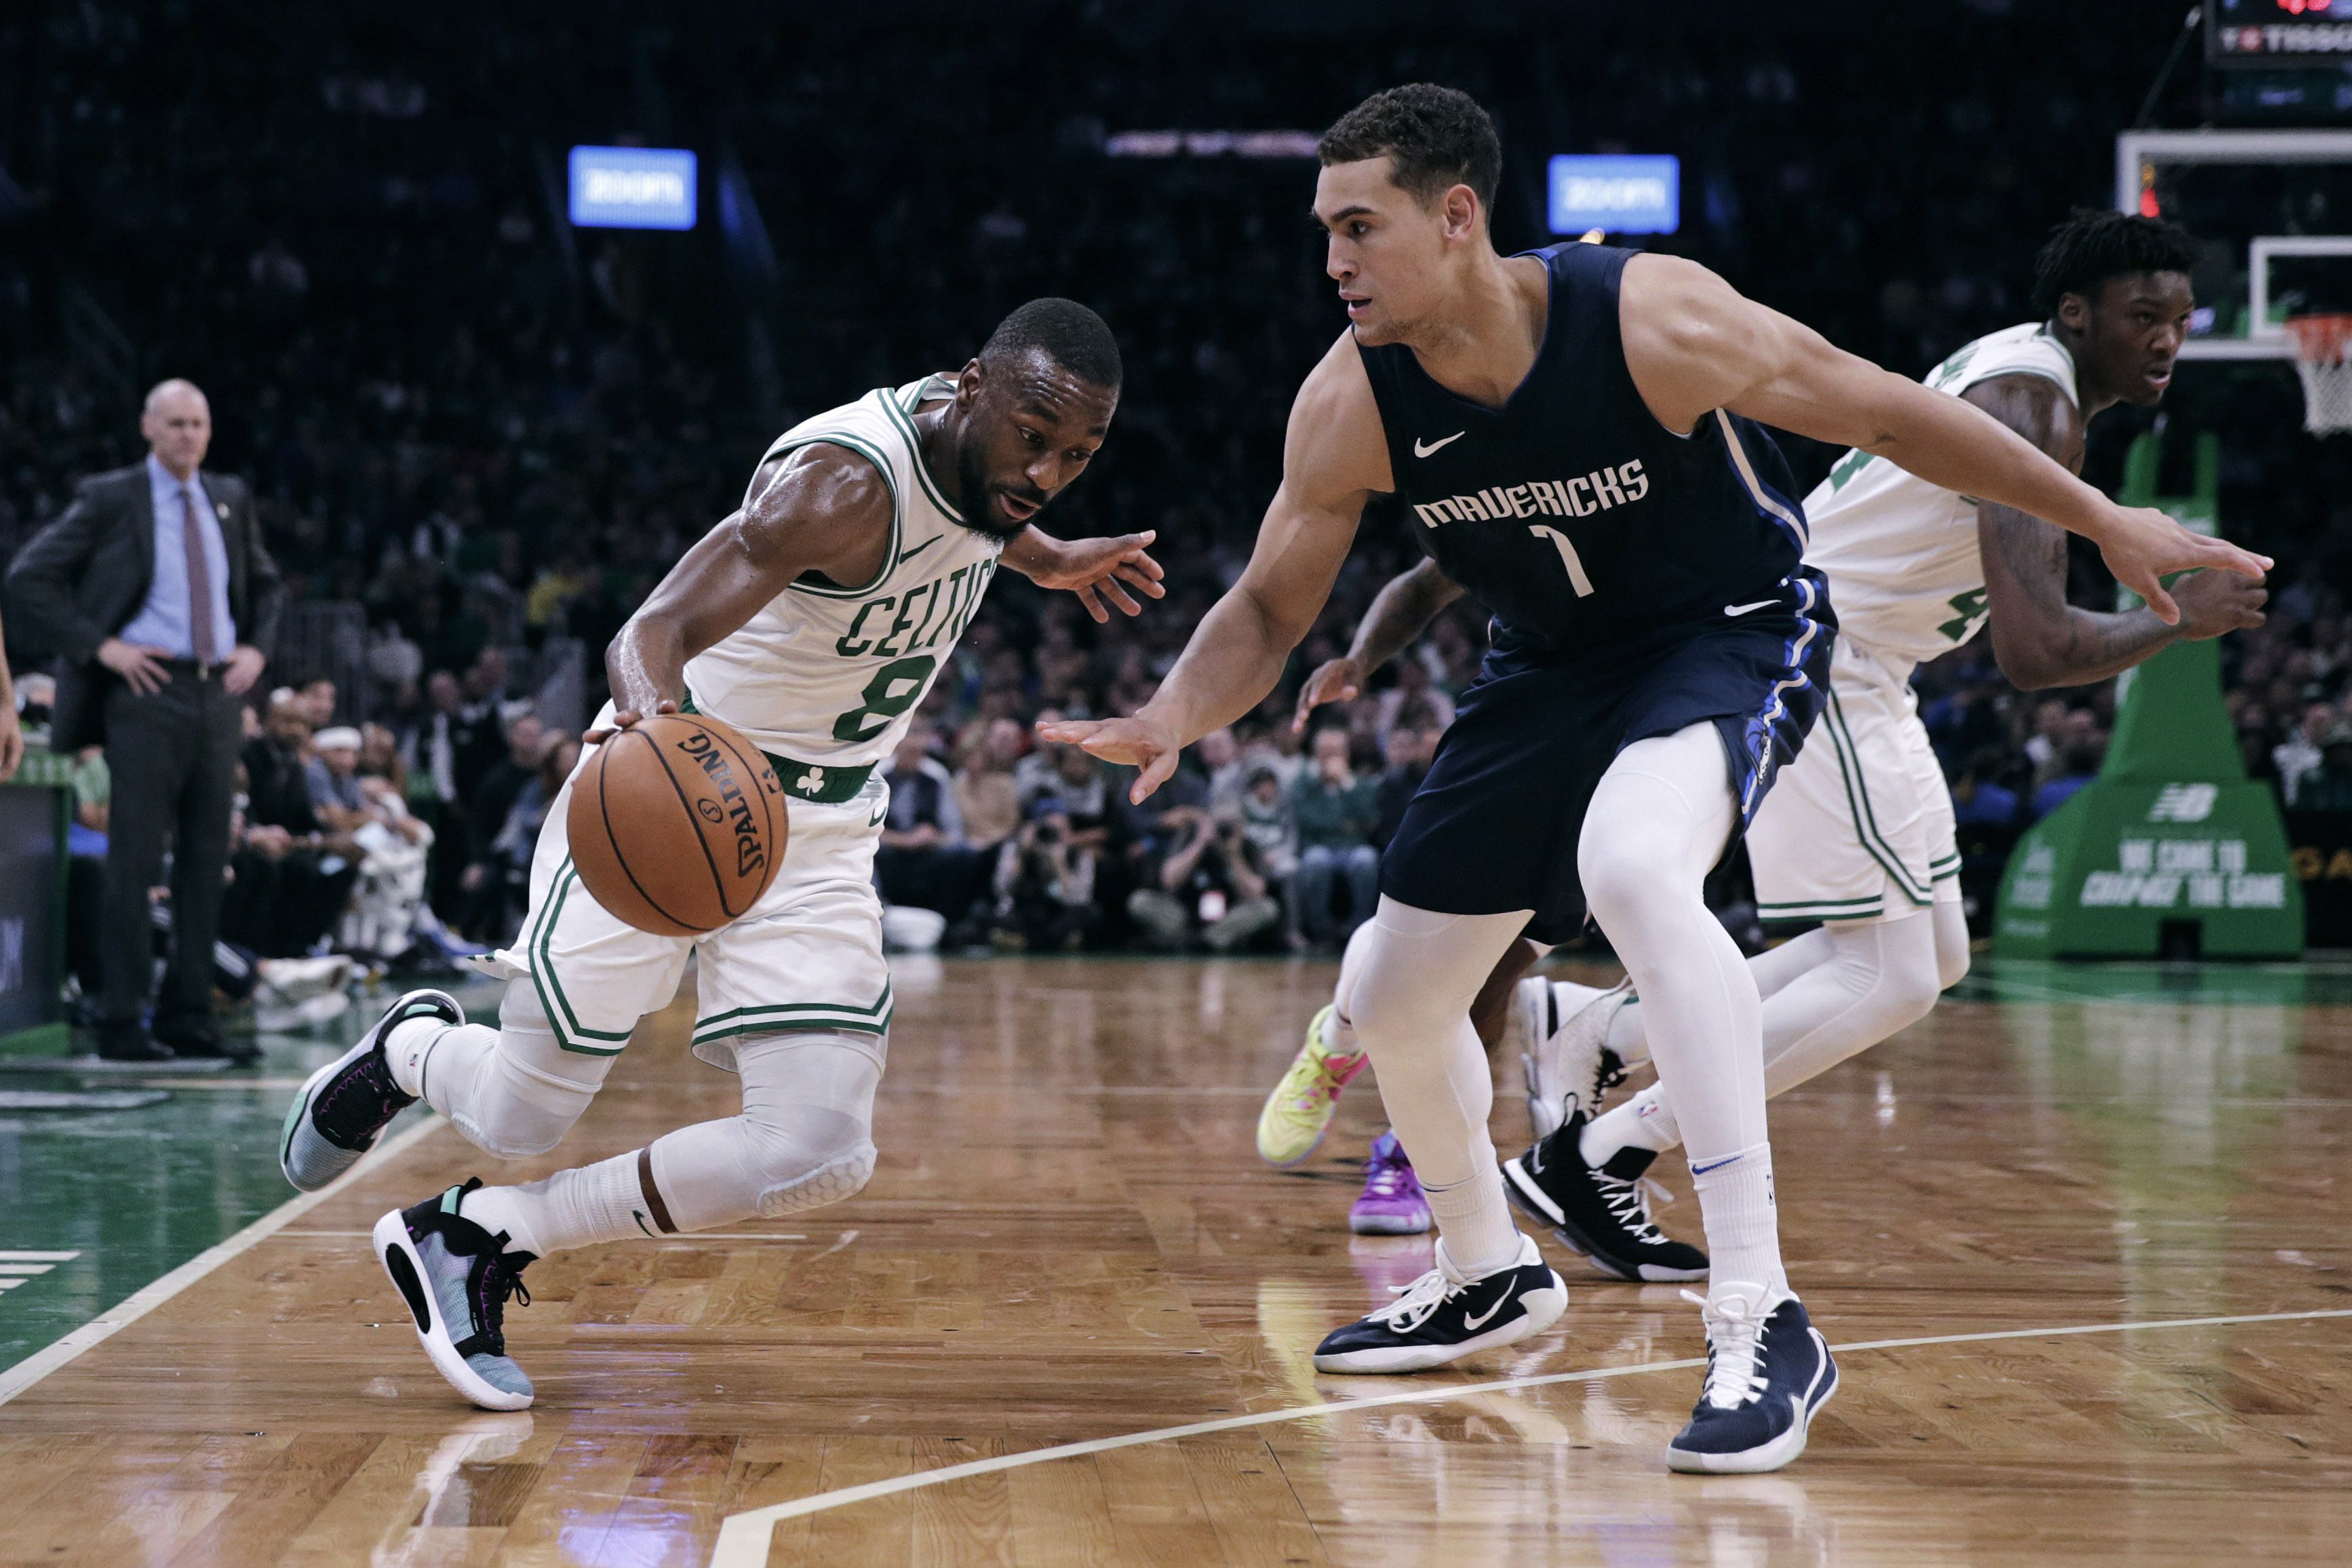 Kemba Walker finding his way in the Celtics offense - CelticsBlog